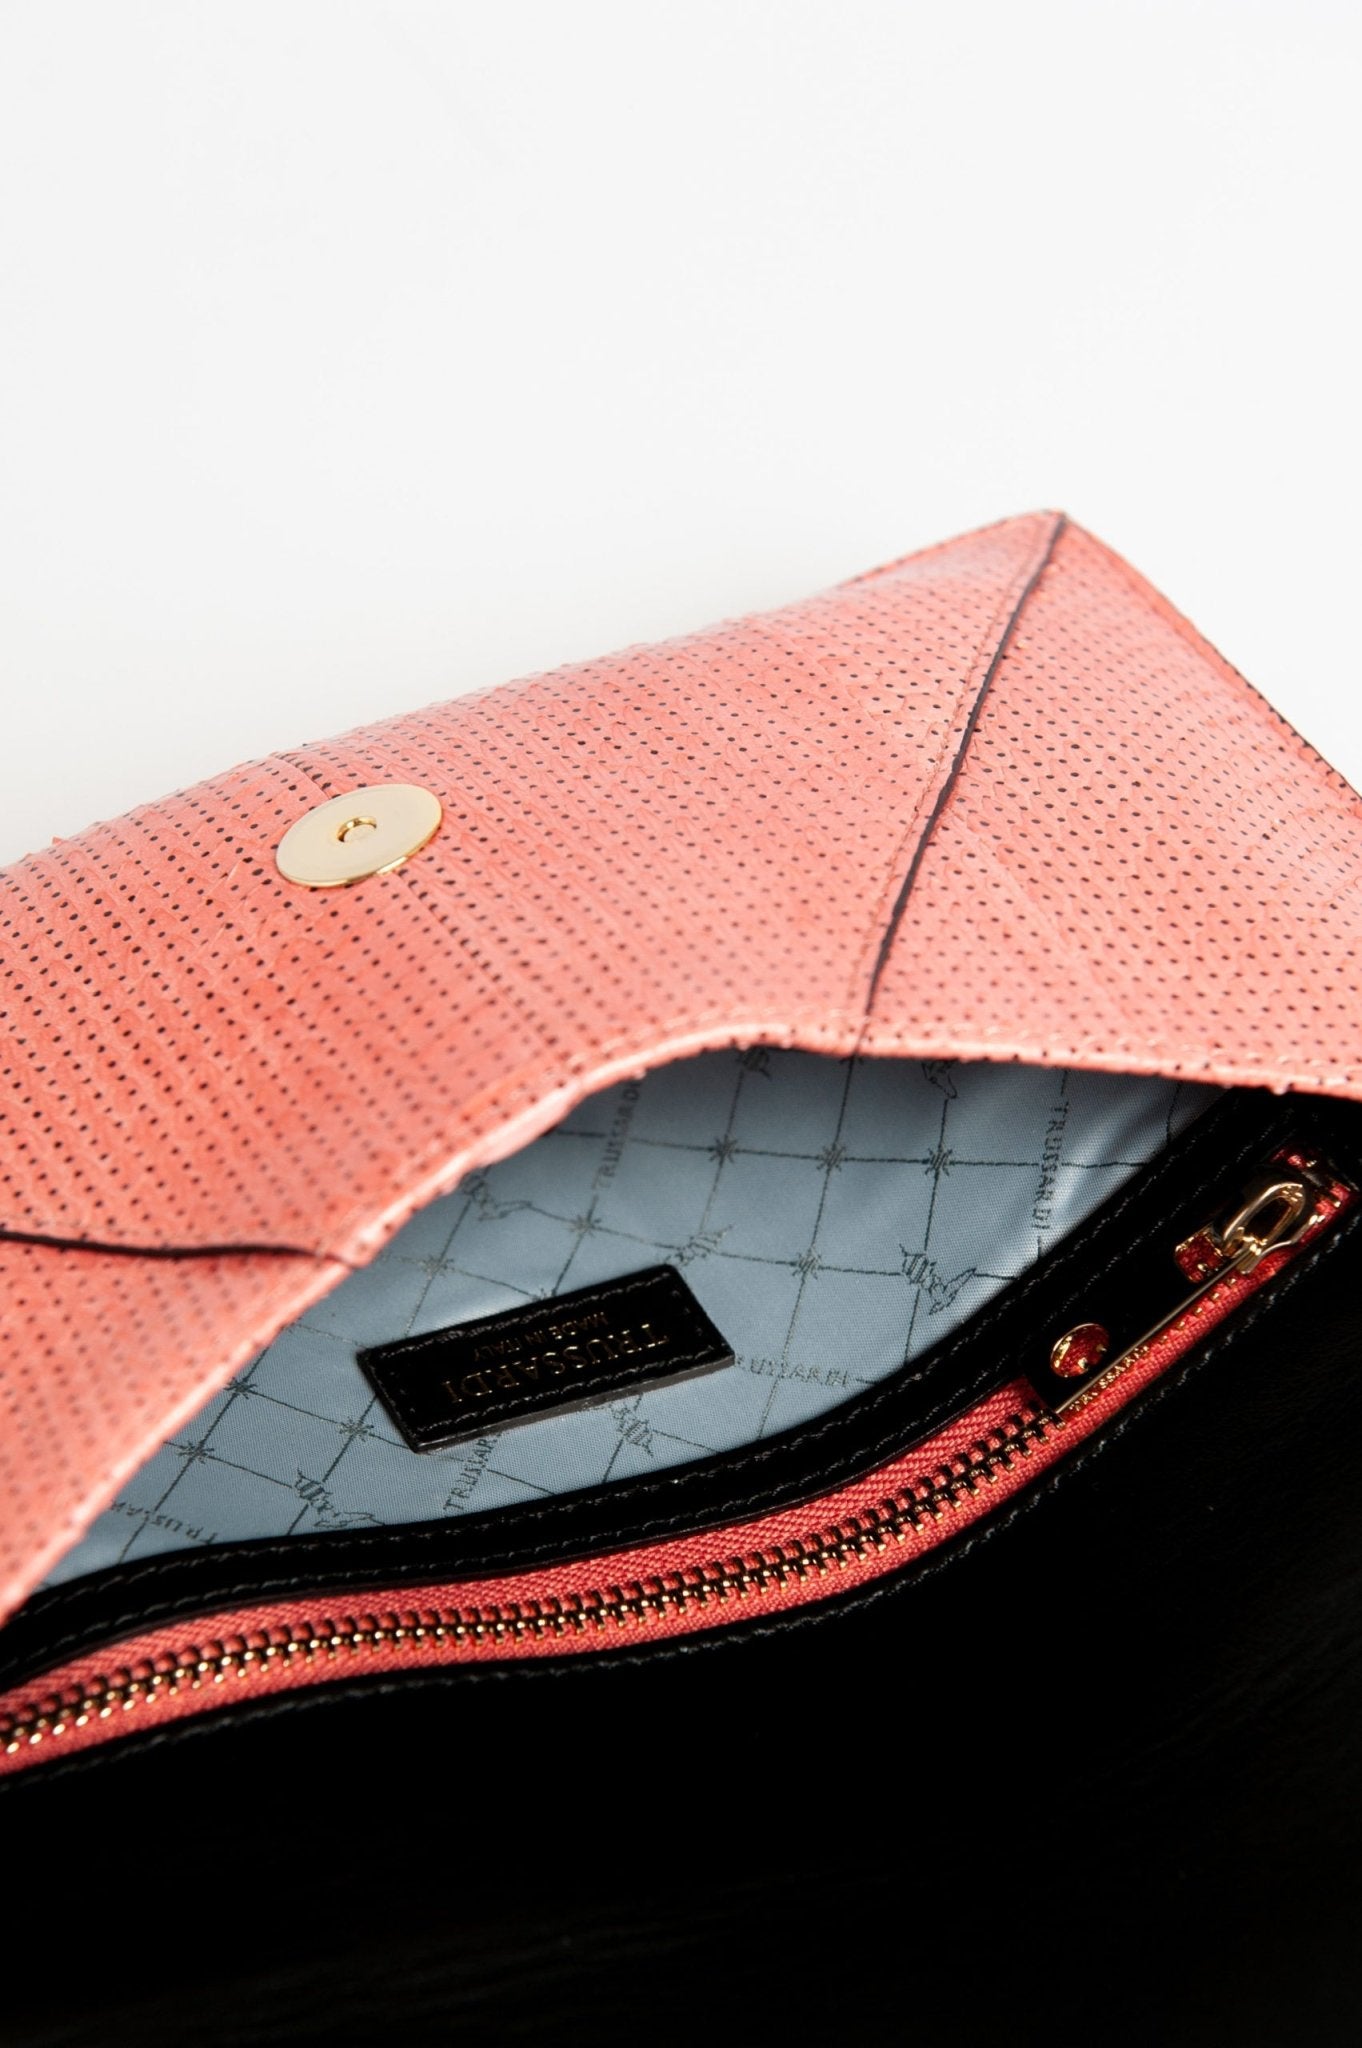 Trussardi Pink Leather Clutch Bag - Fizigo